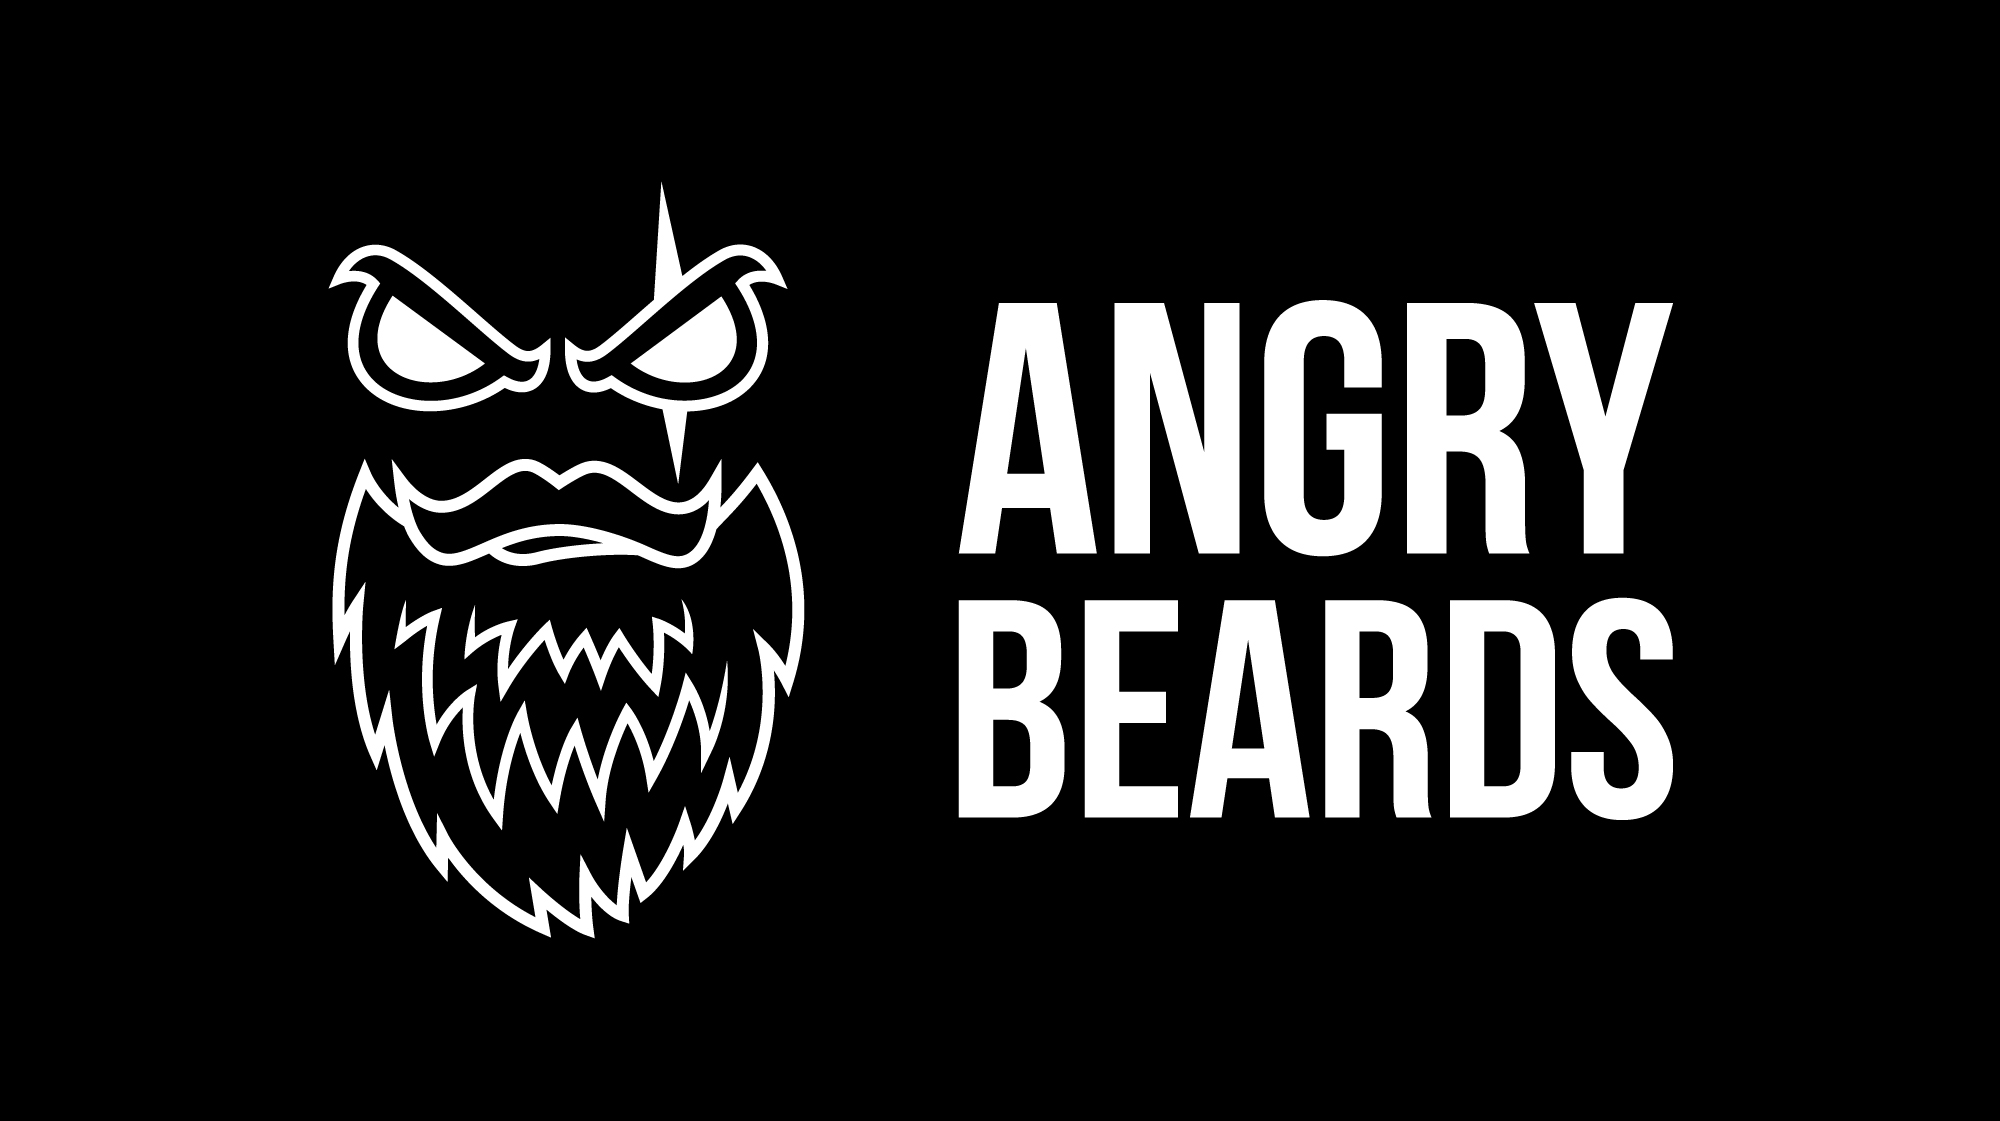 Angry beards - logo